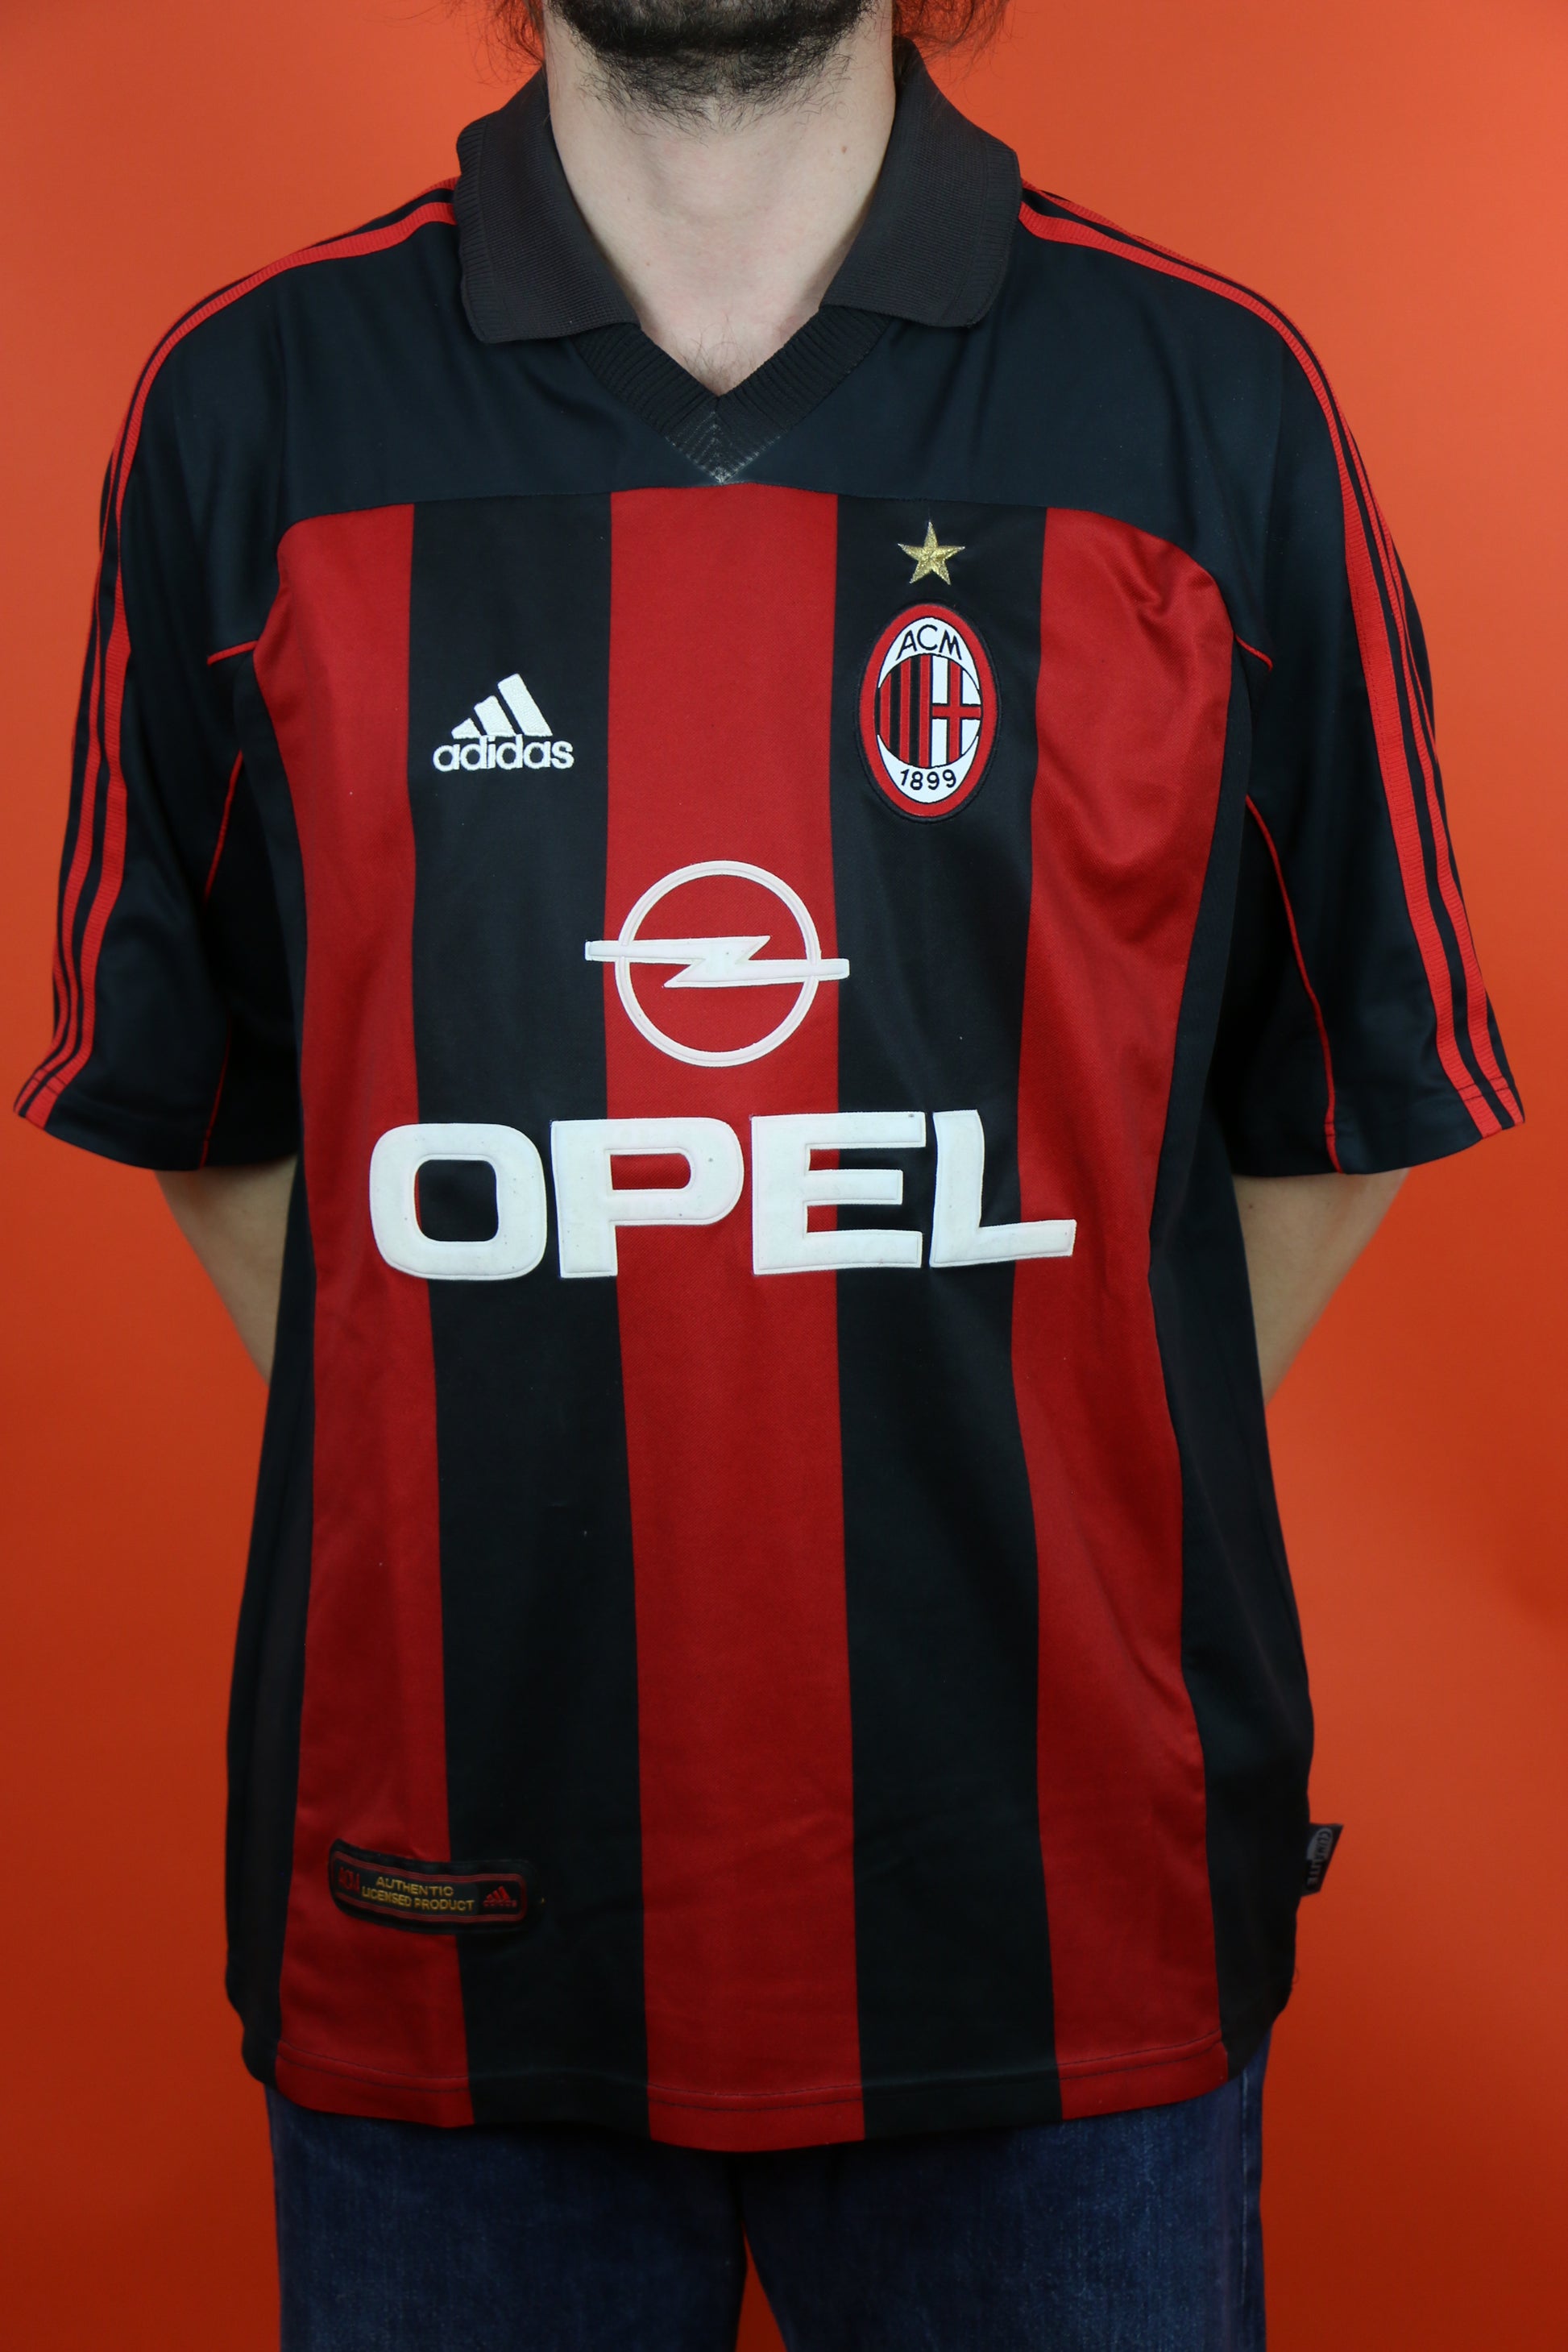 AC Milan Football Jersey 2000 - vintage clothing clochard92.com